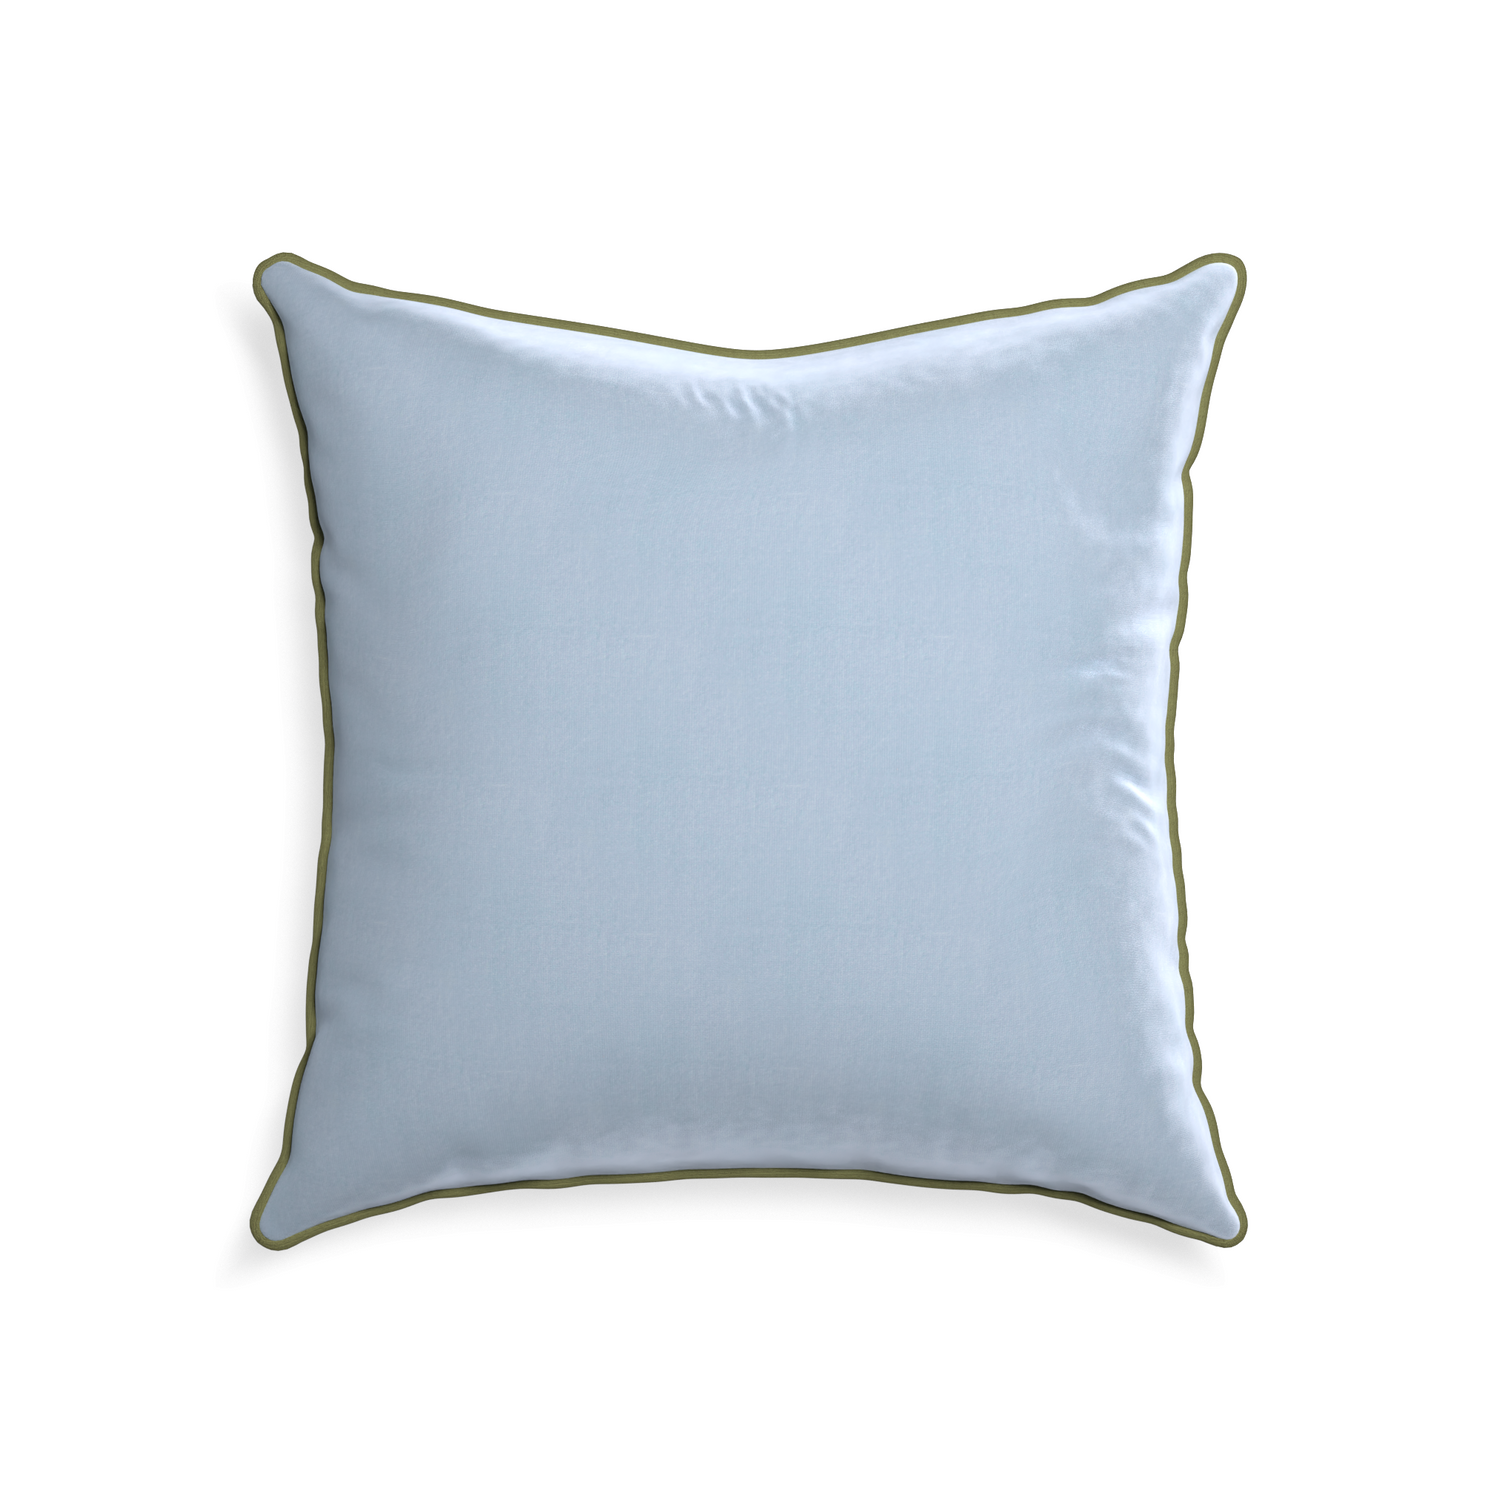 22-square sky velvet custom pillow with moss piping on white background